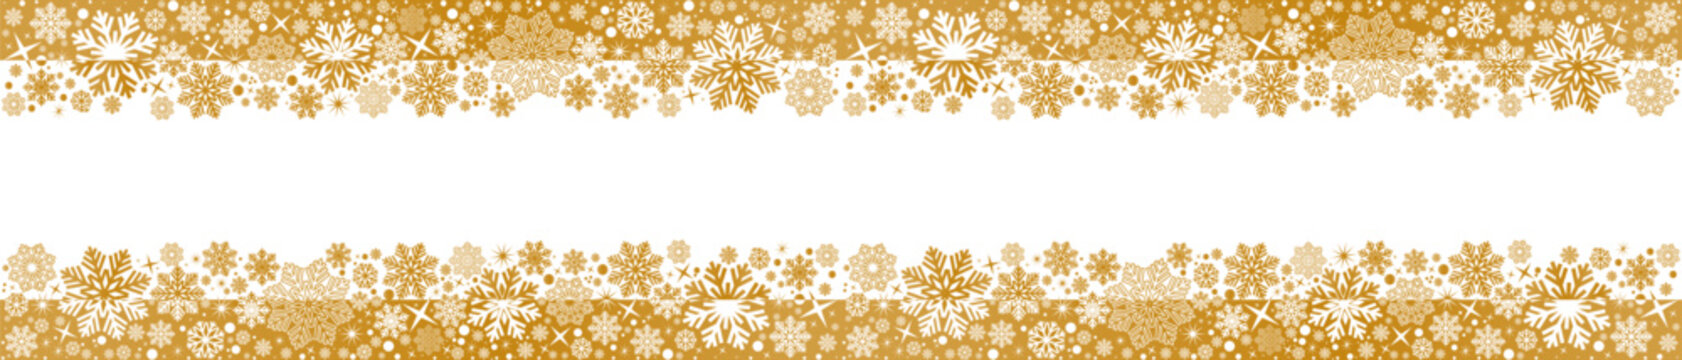 Snowflakes seamless border .Ornament with golden snowflakes and stars .Christmas golden horizontal border.Christmas decoration.